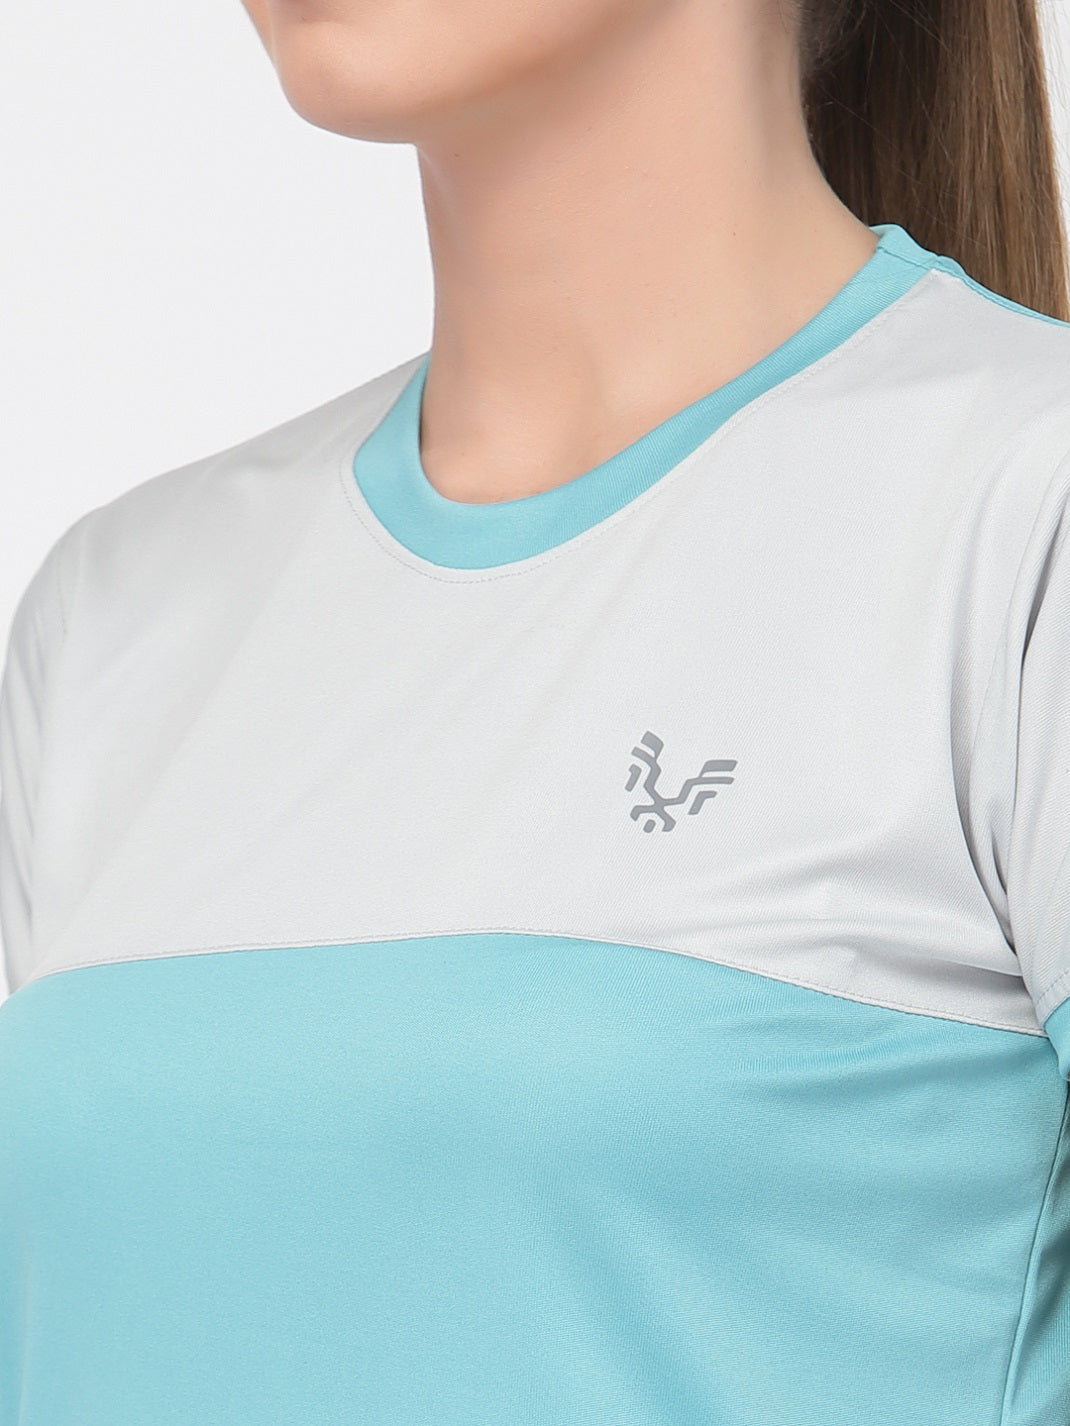 UZARUS Women's Dry Fit Workout Top Sports Gym T-Shirt